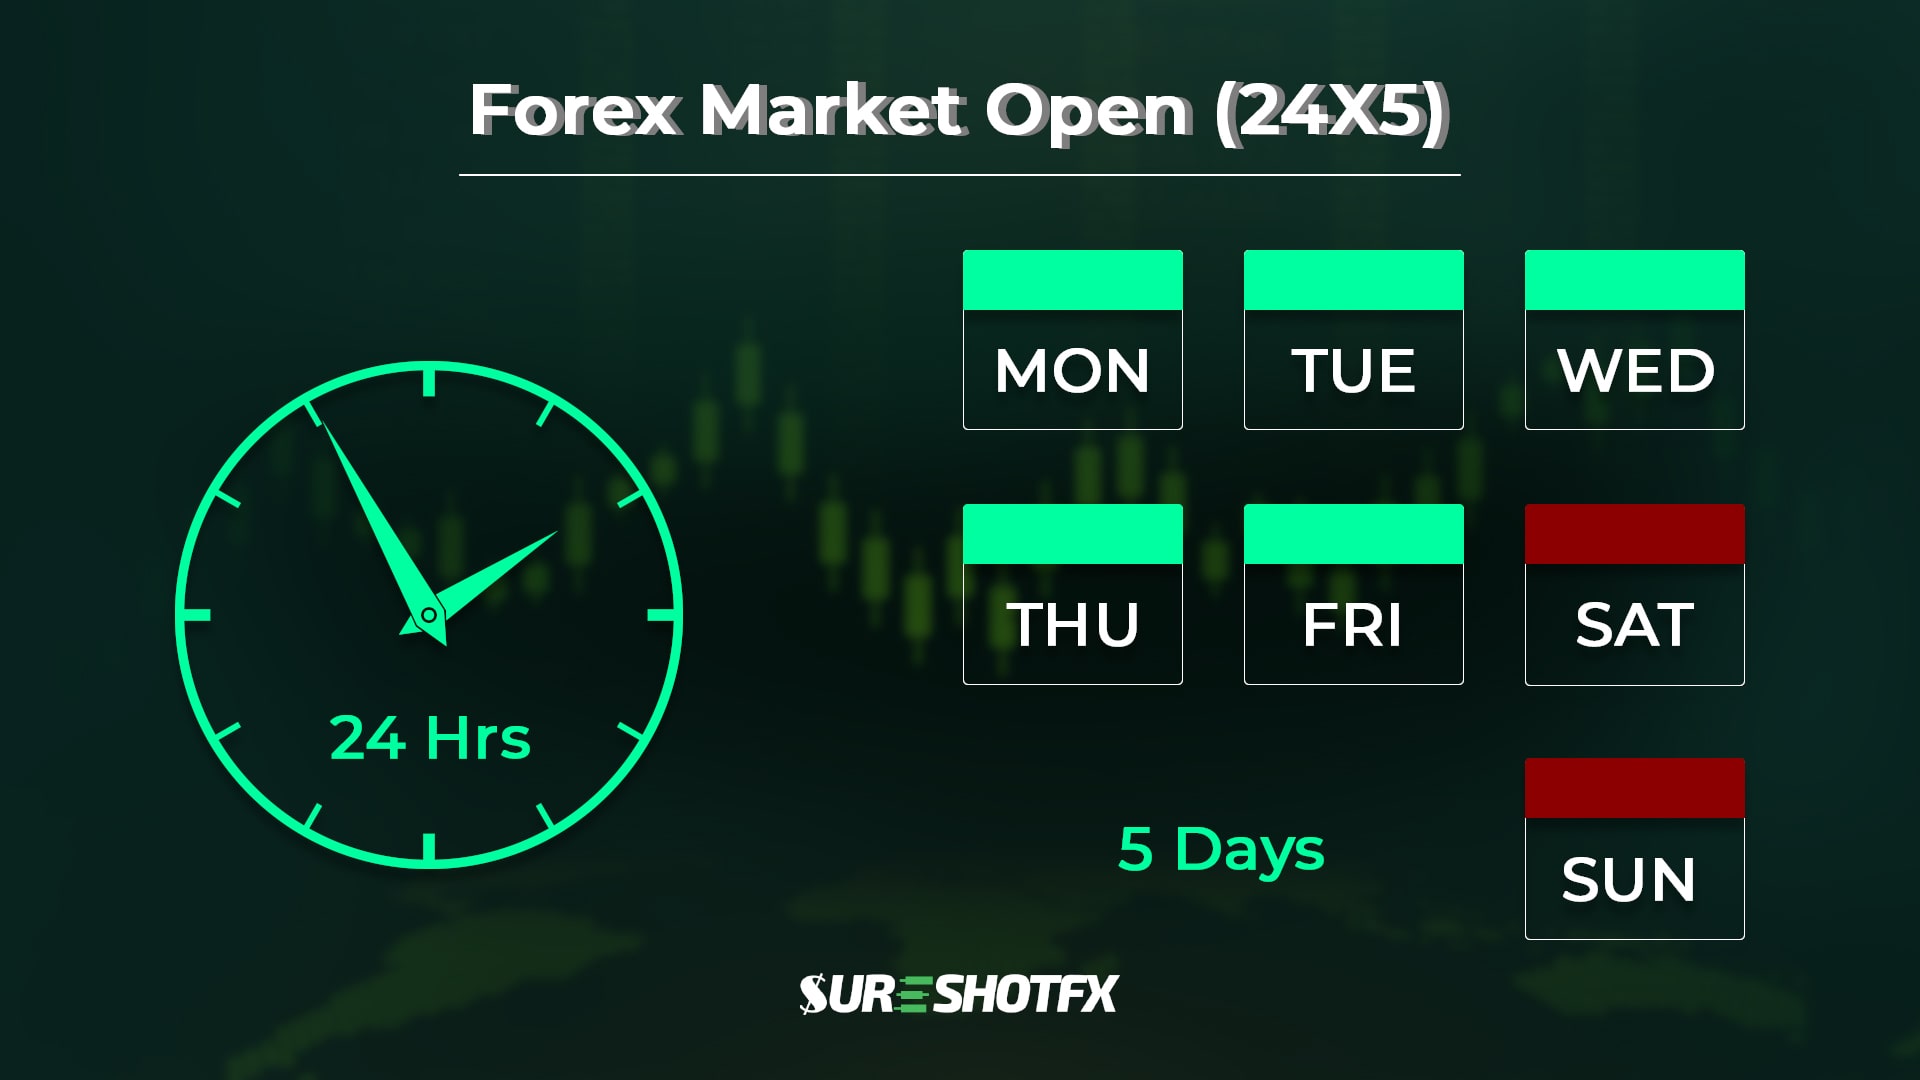 Forex Market Open Hours